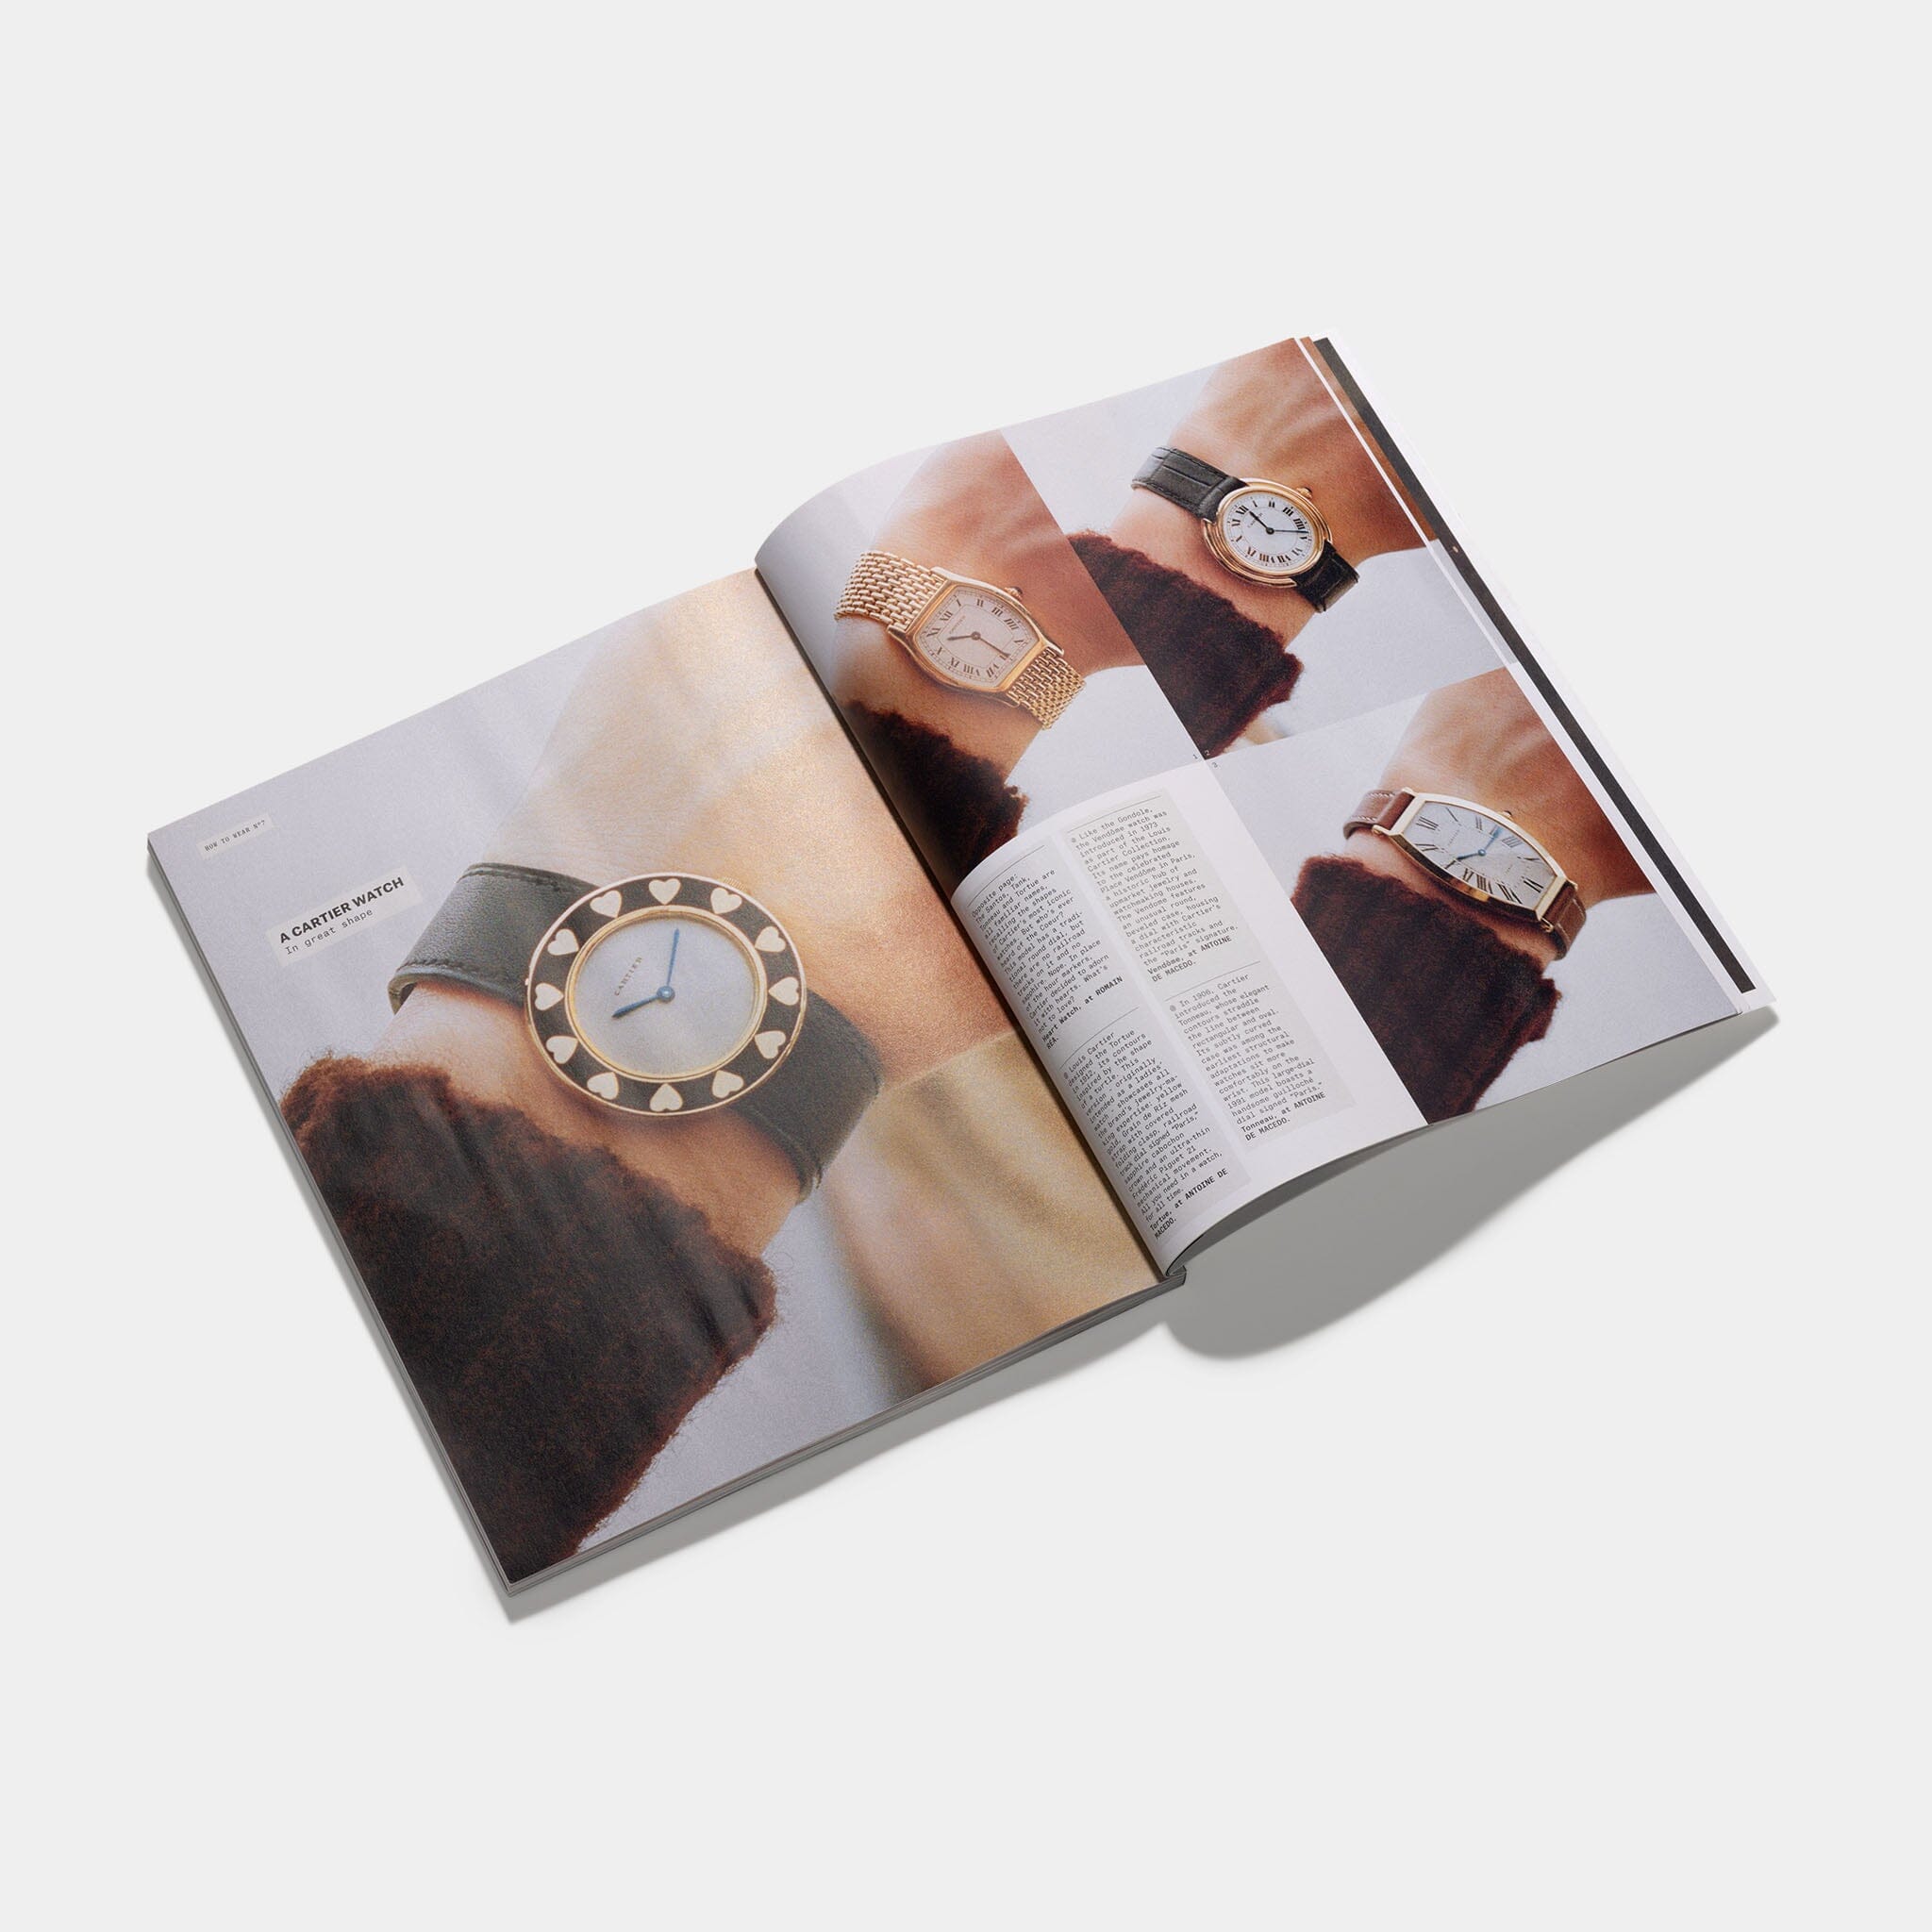 Cartier Watch special in L'Etiquette 11 Fashion Magazine